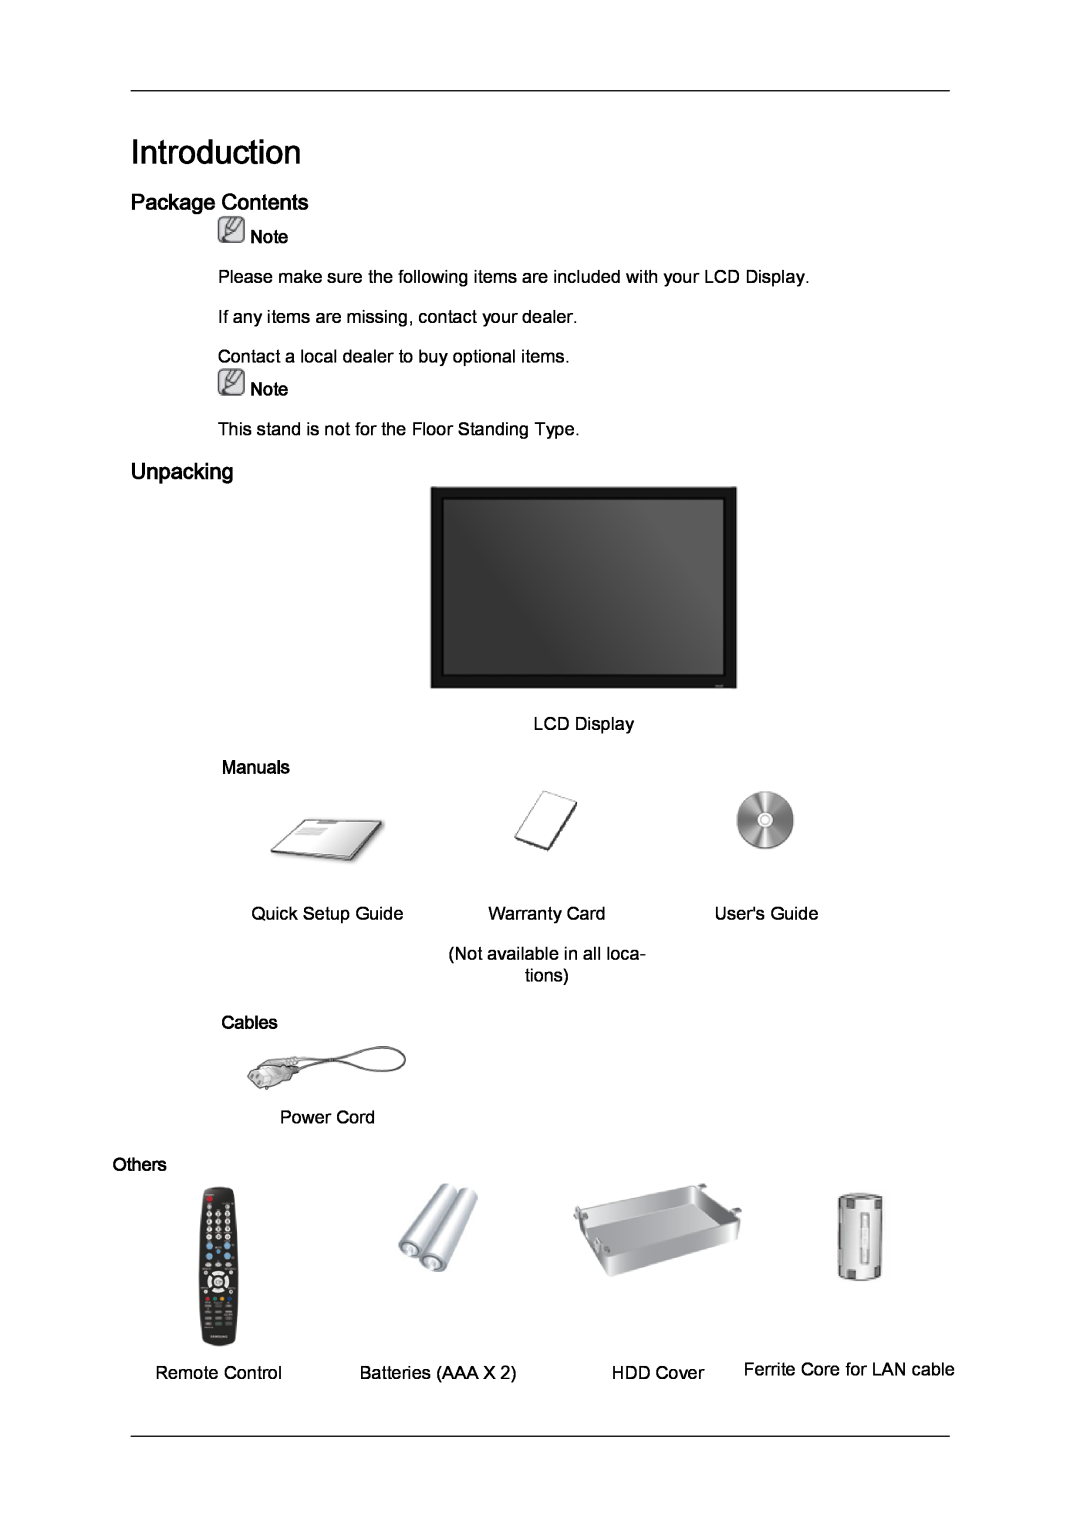 Samsung LH40MGQLBC/XY, LH40MGUMBC/EN, LH46MGUMBC/EN manual Introduction, Package Contents, Unpacking, Manuals, Cables, Others 